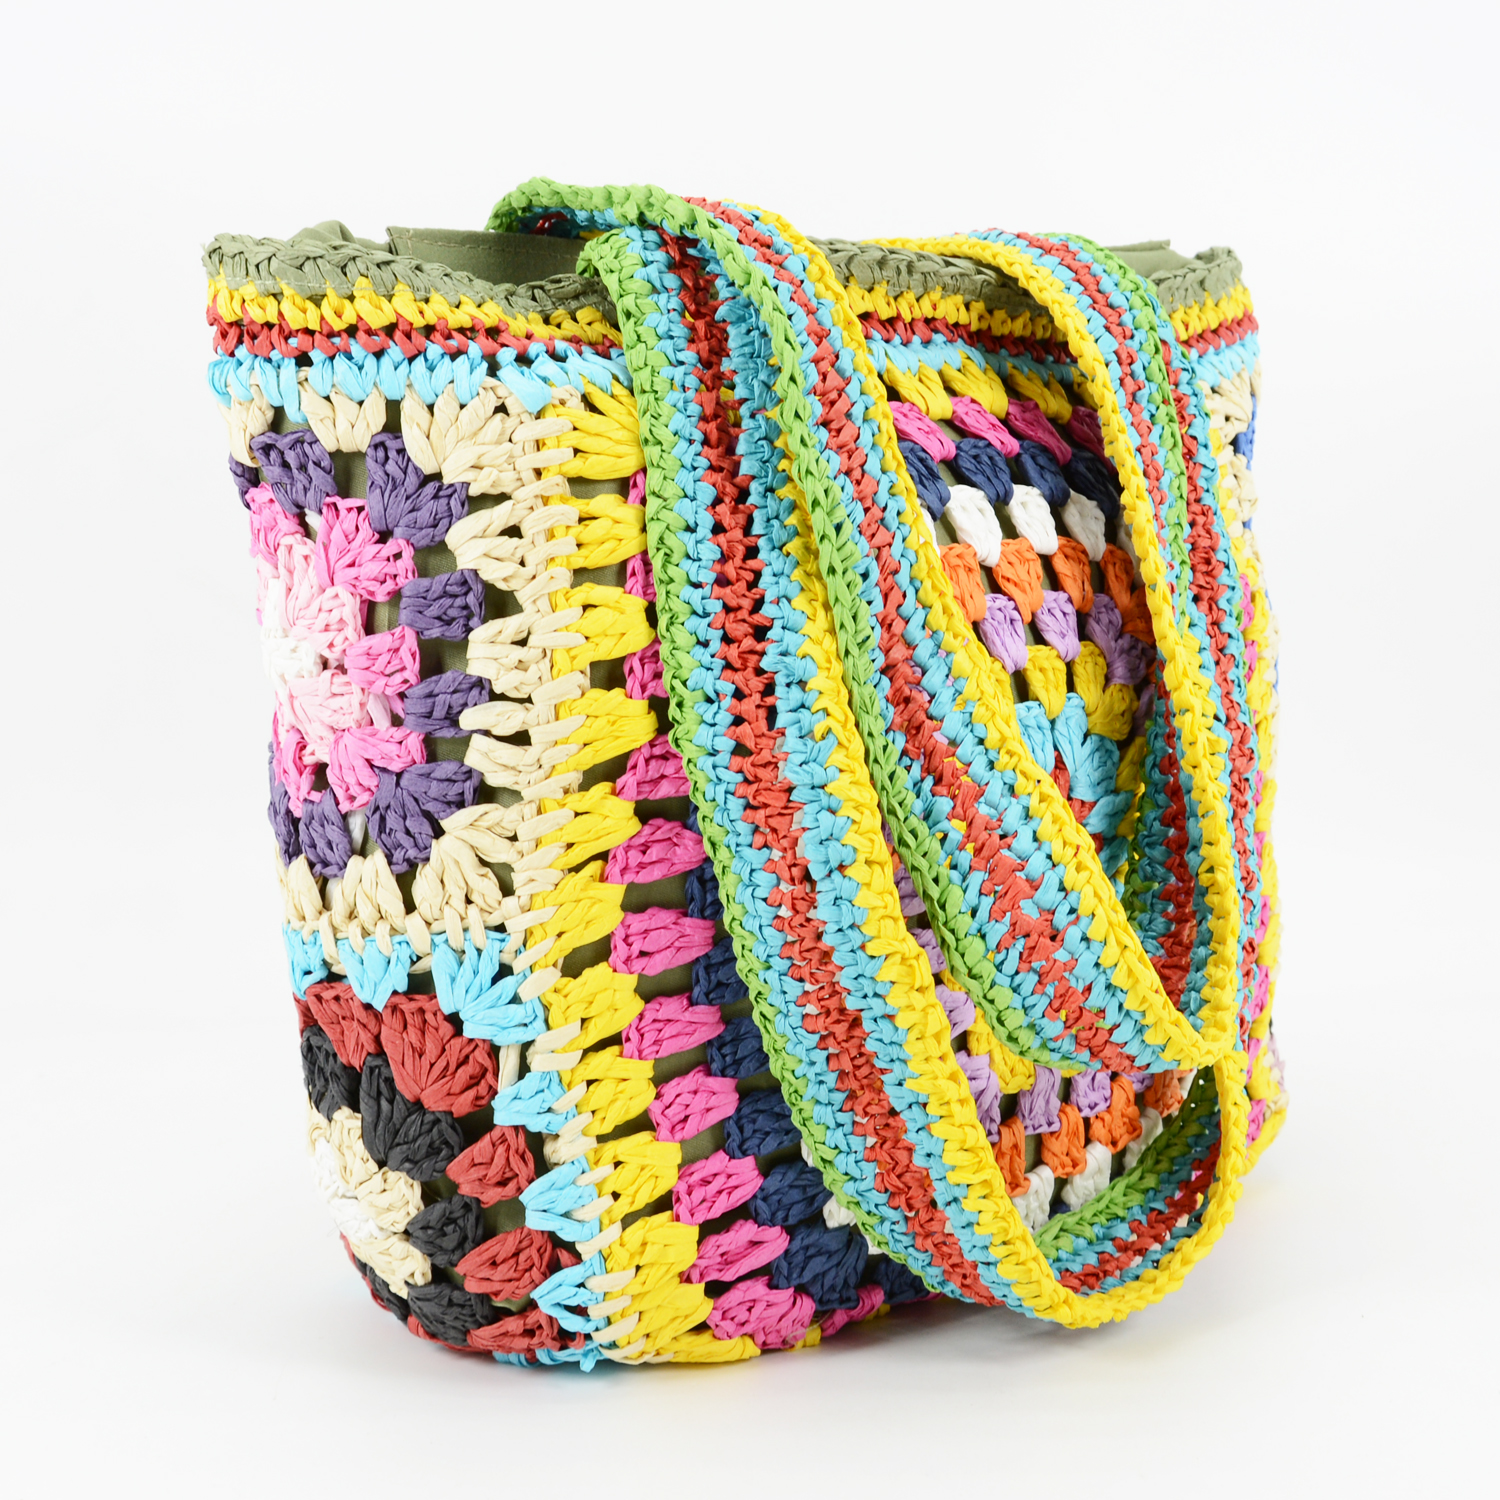 Large Capacity Colorful Handmade Knit Crochet Tote Bag